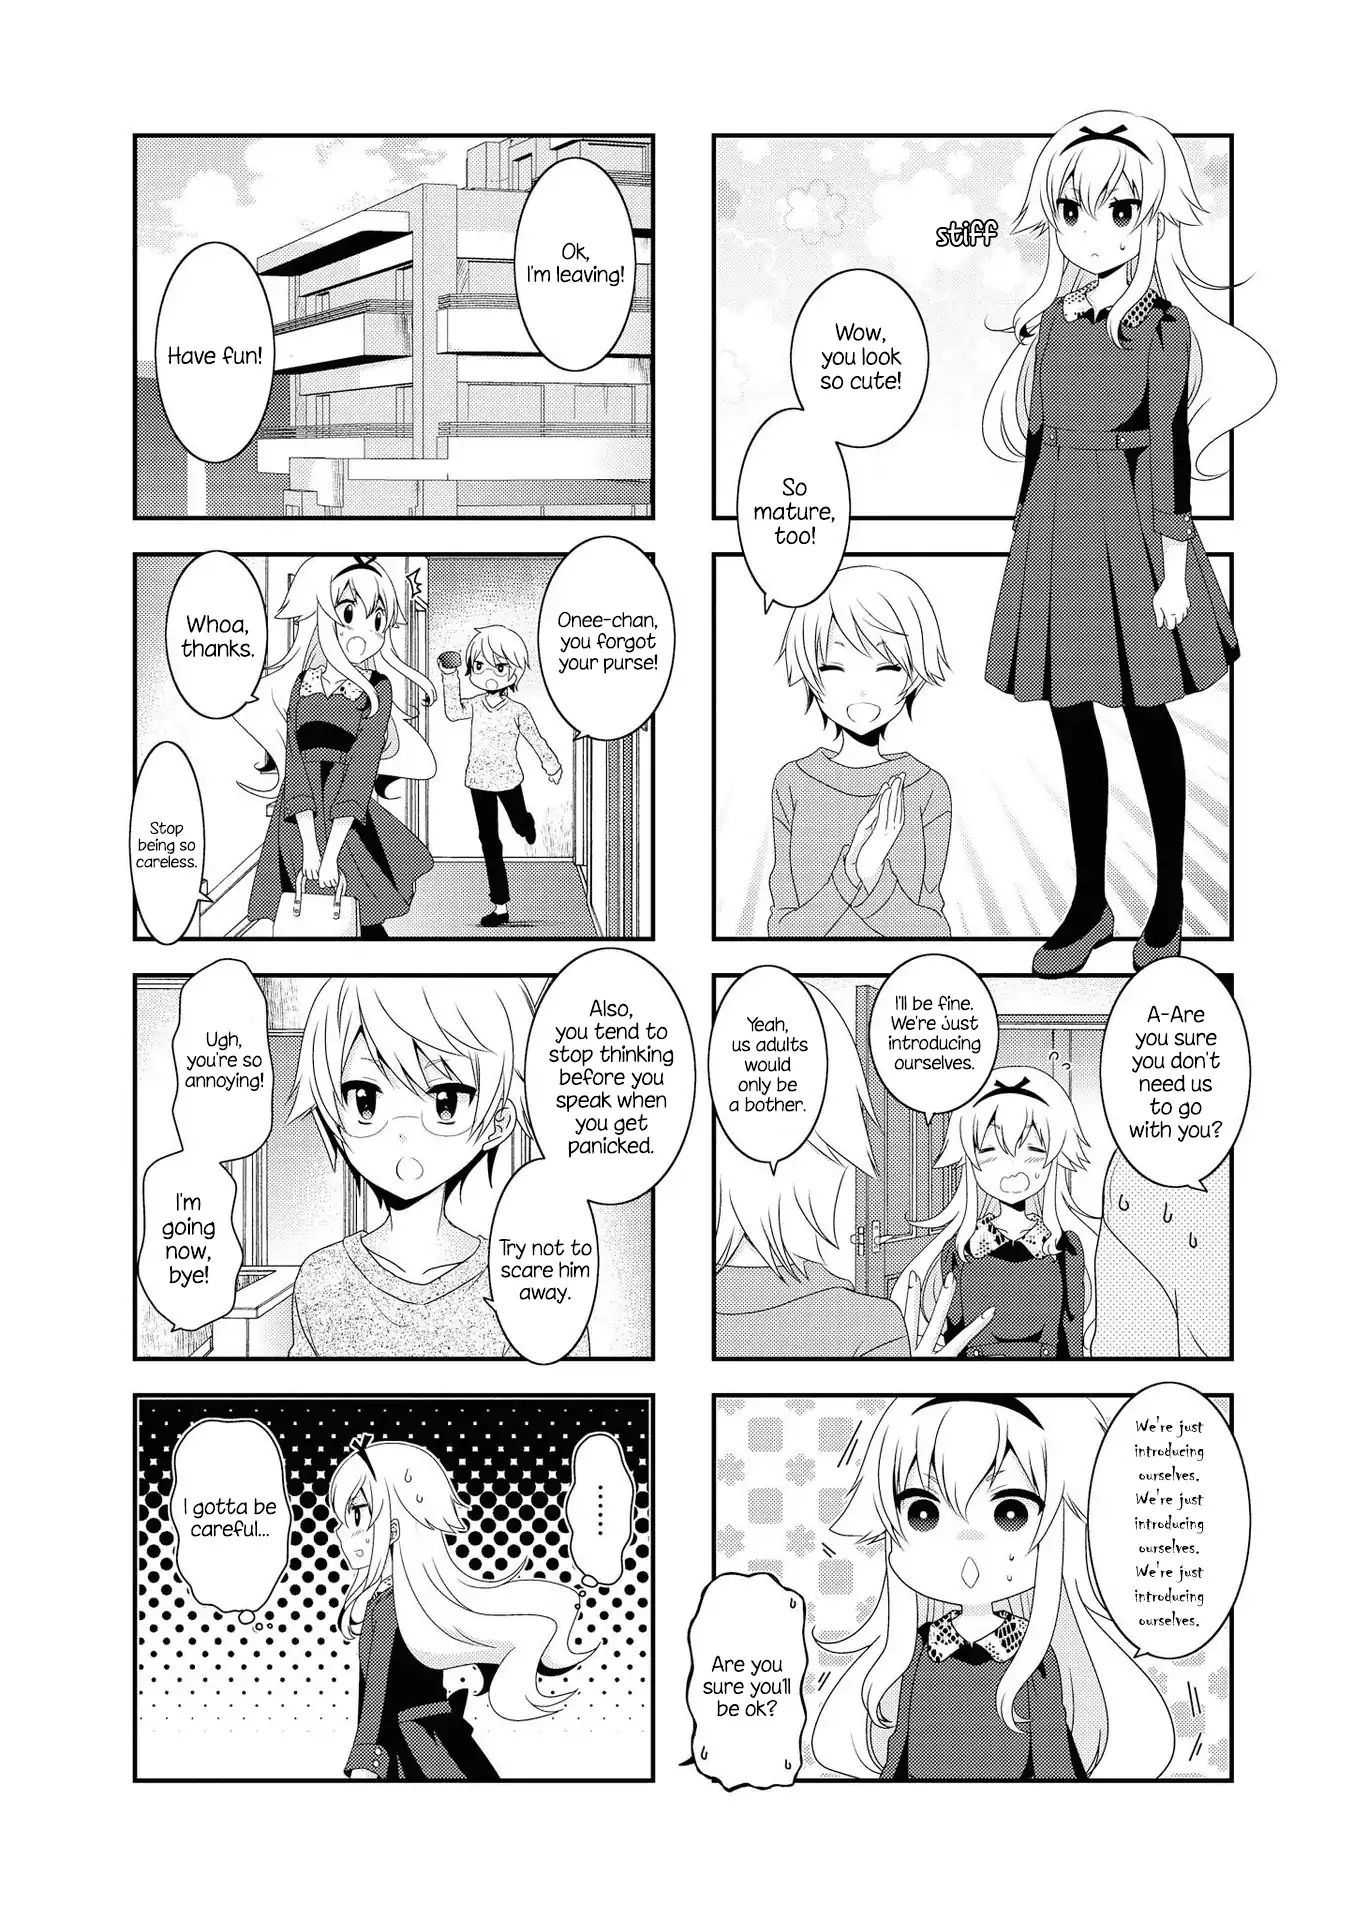 Read Mikakunin de Shinkoukei Manga English [New Chapters] Online Free -  MangaClash